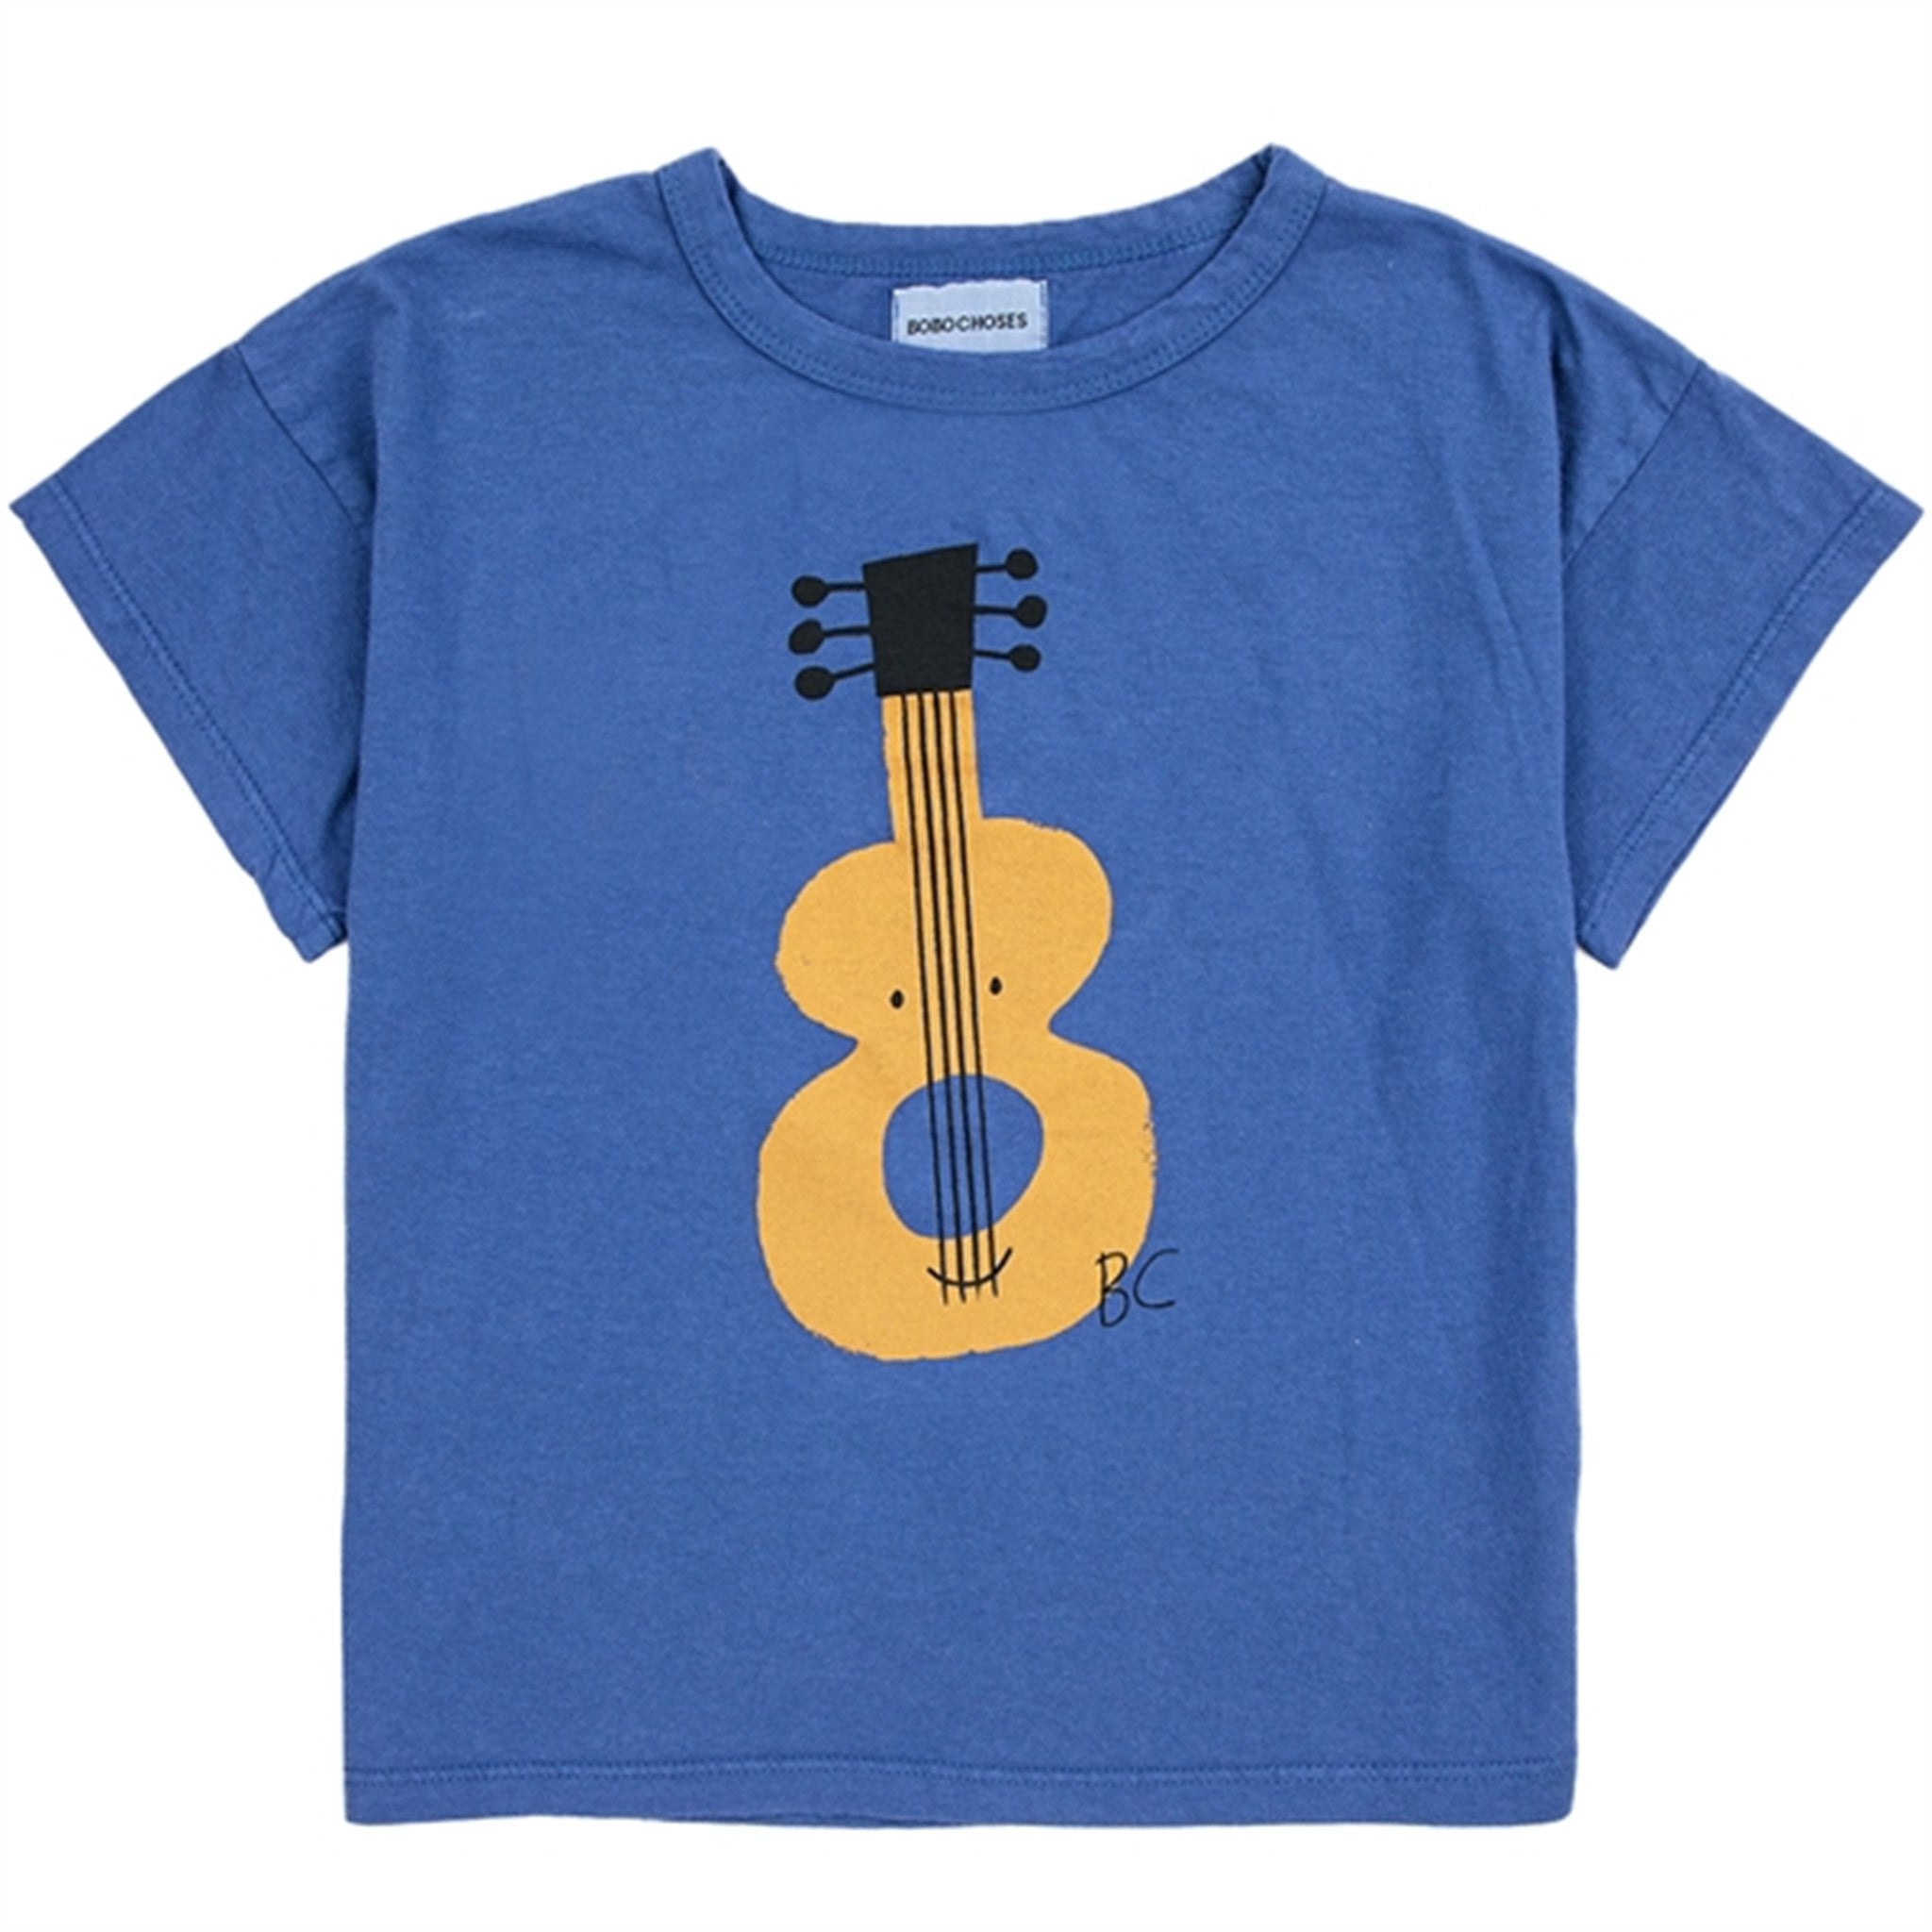 Bobo Choses Acoustic Guitar T-Shirt Navy Blue